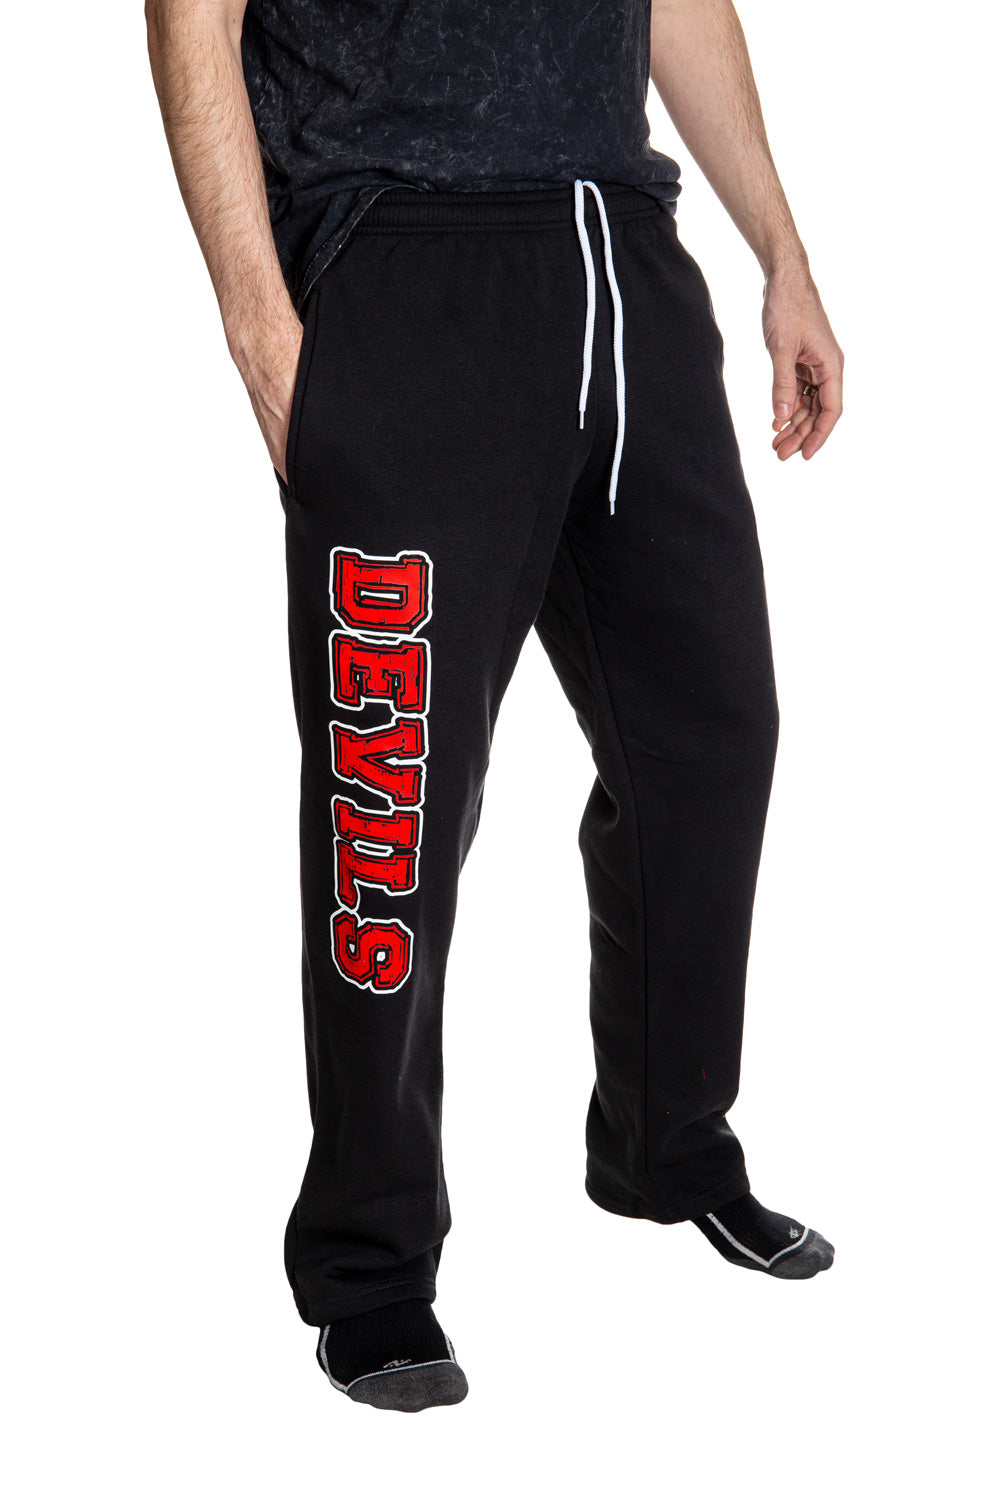 New Jersey Devils Premium Fleece Sweatpants Side View Of Devils Print On Leg.